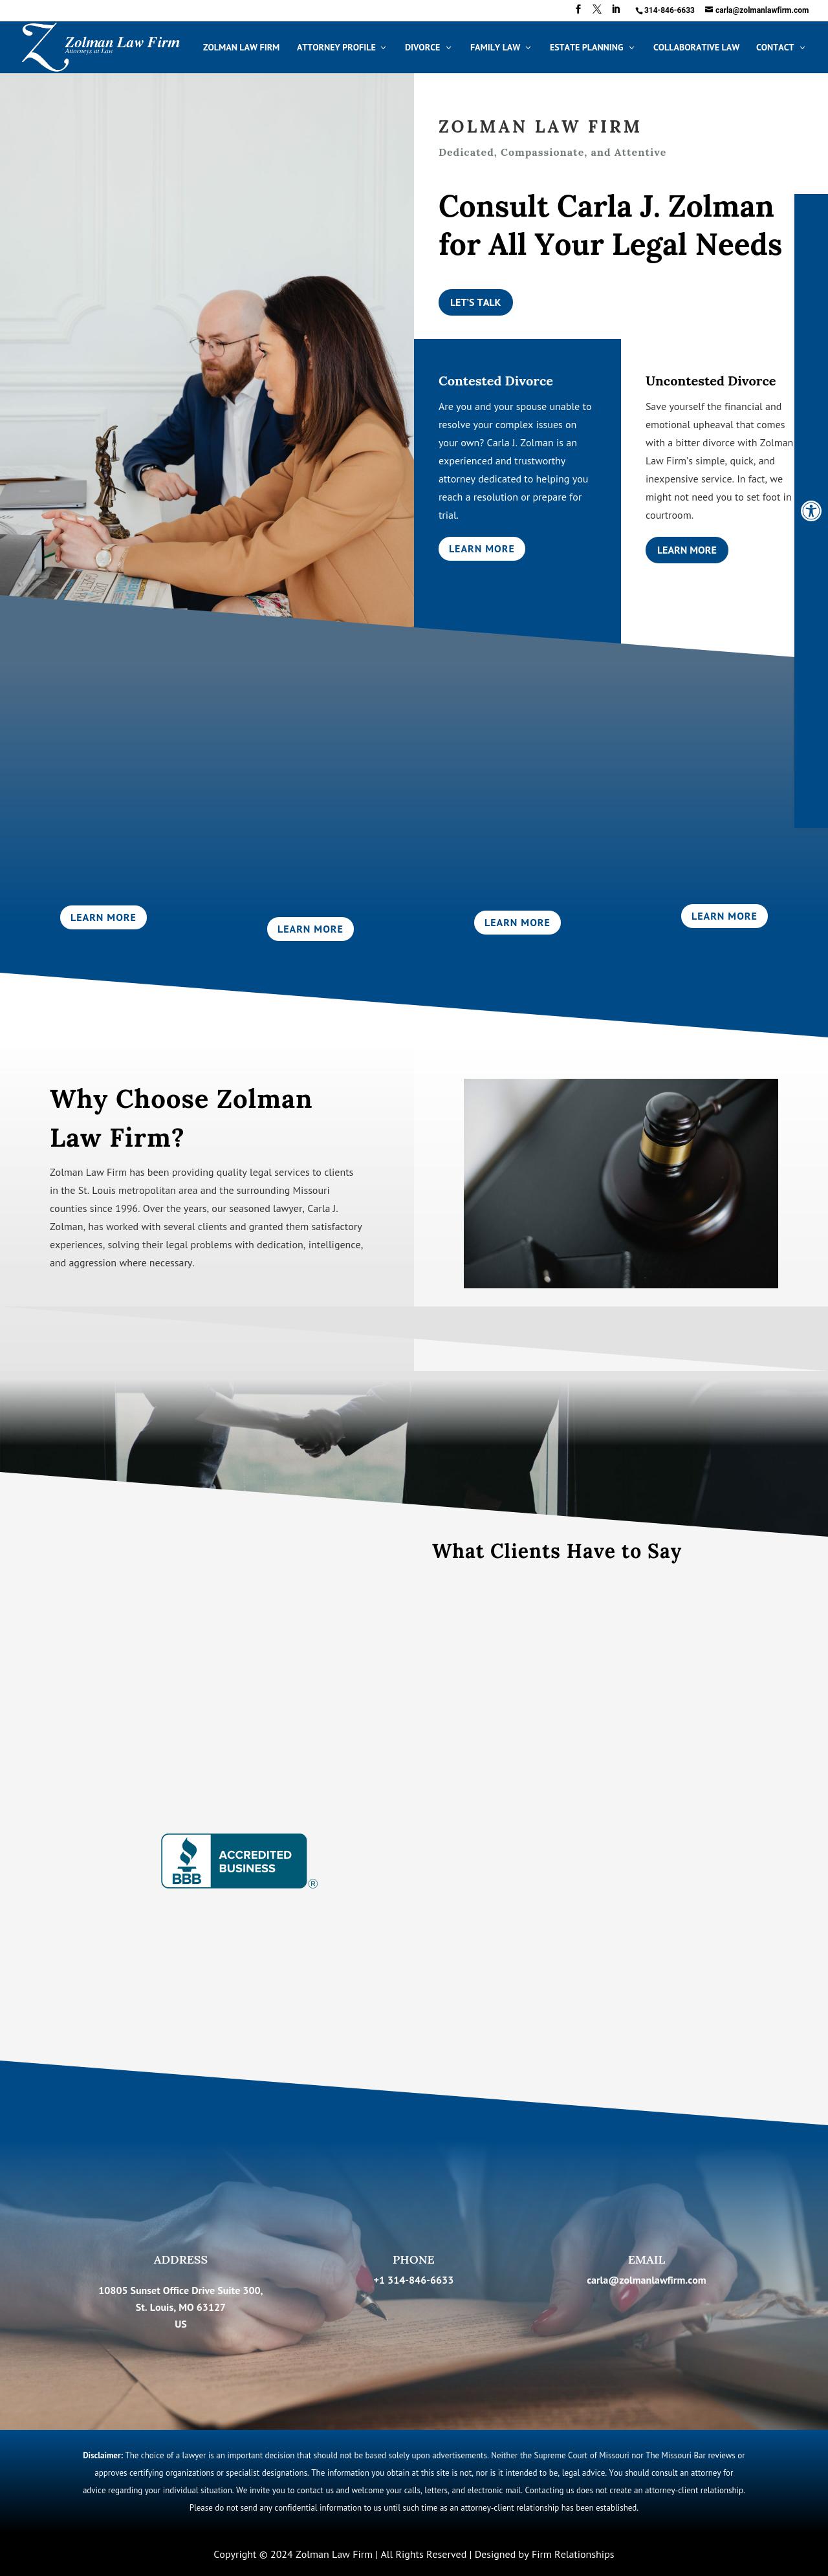 Zolman Law Firm - St. Louis MO Lawyers